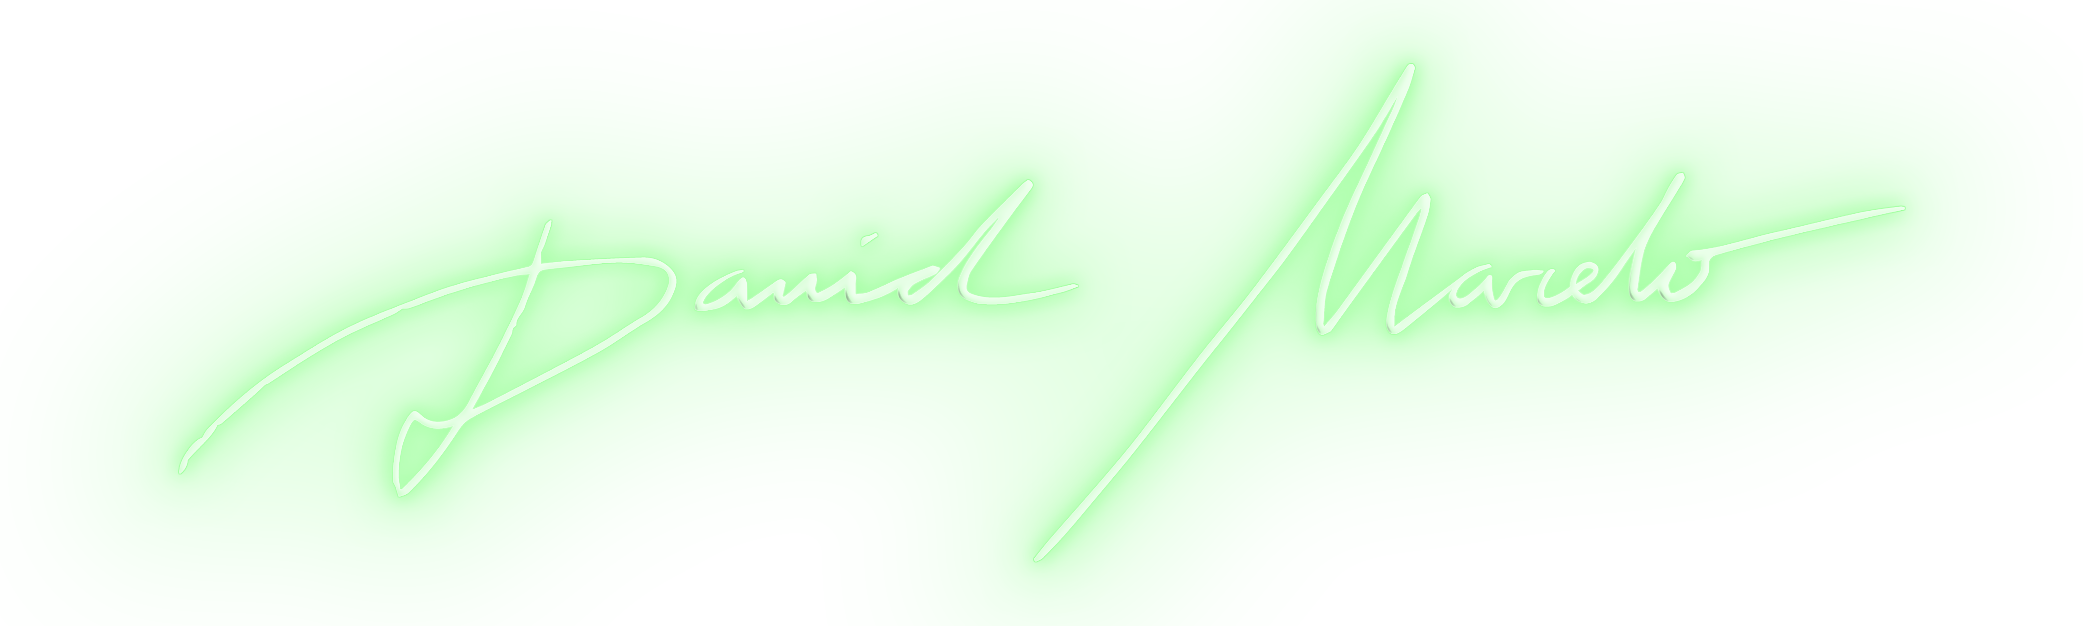 Firma Neon del artista David Marcelo